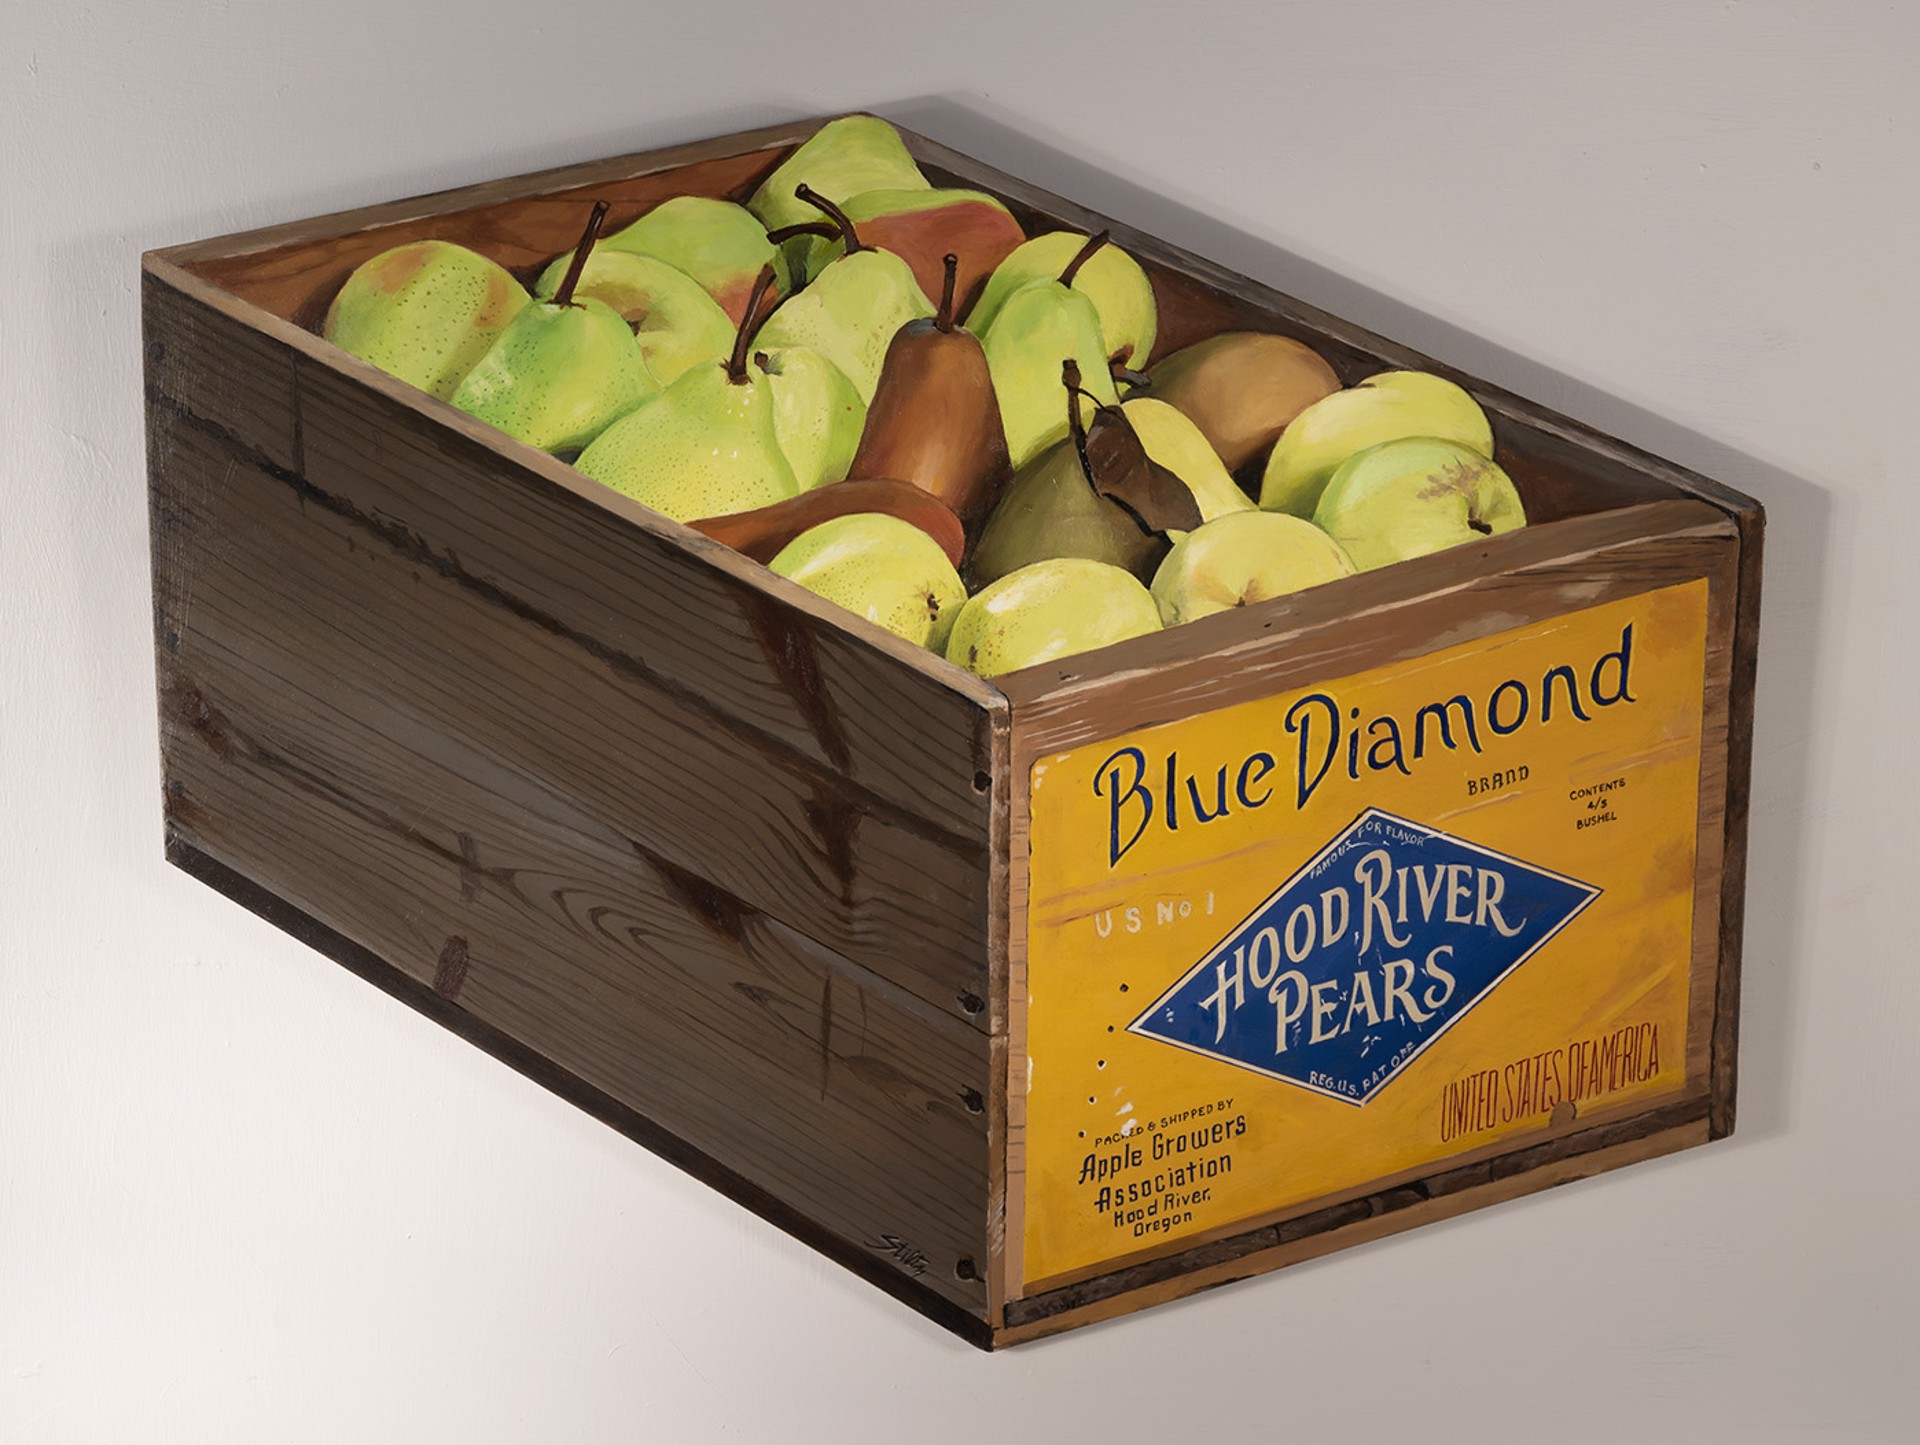 Hood River Pears by Tom Stiltz